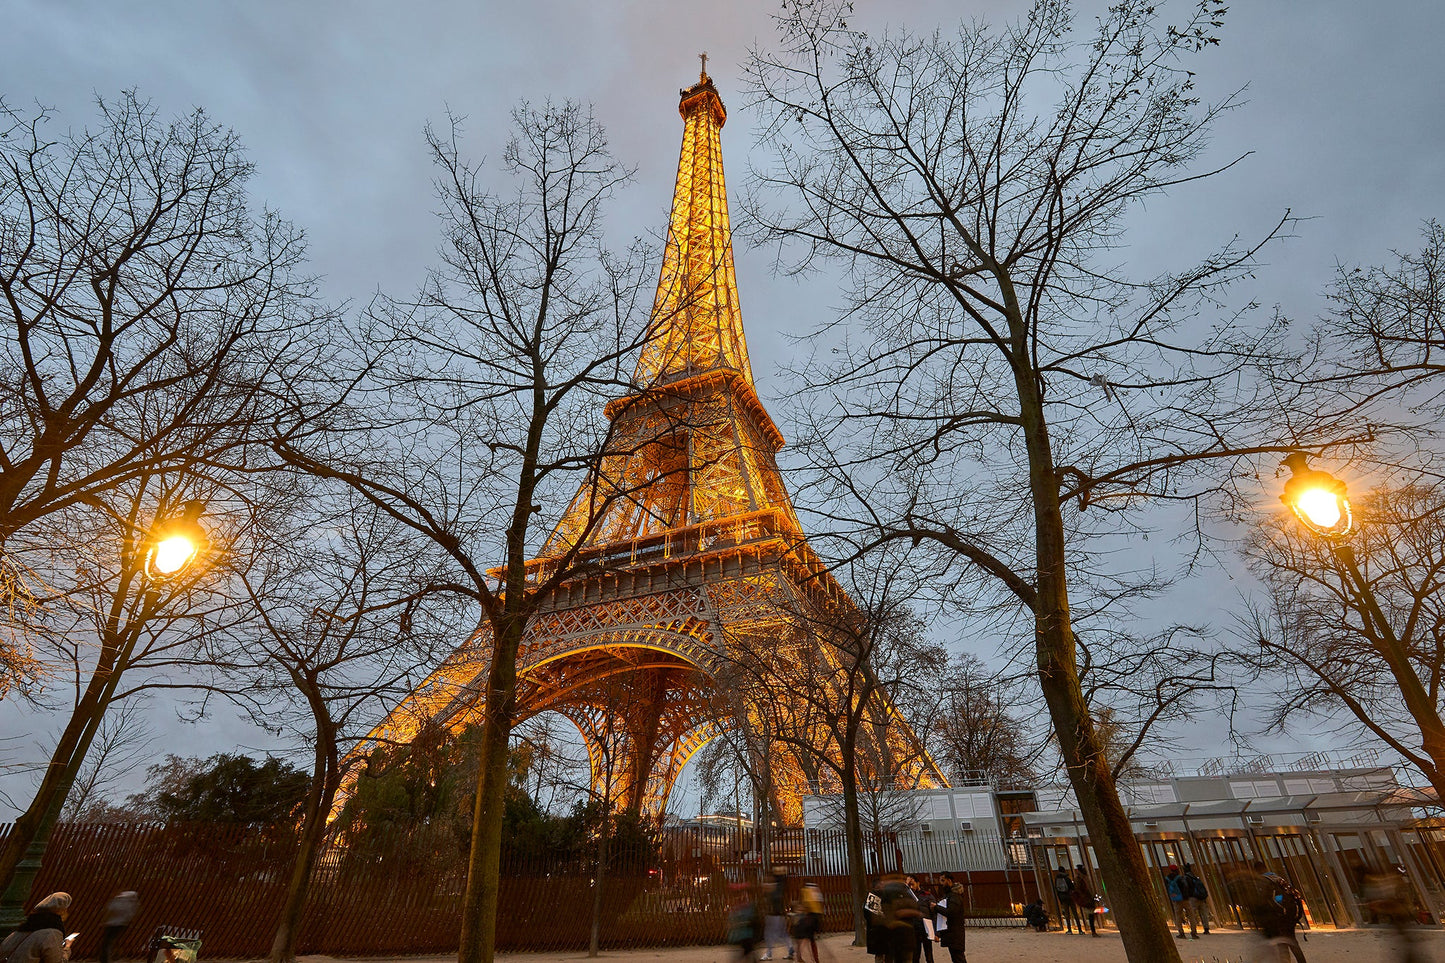 Eiffel Tower 2 - Paris, France